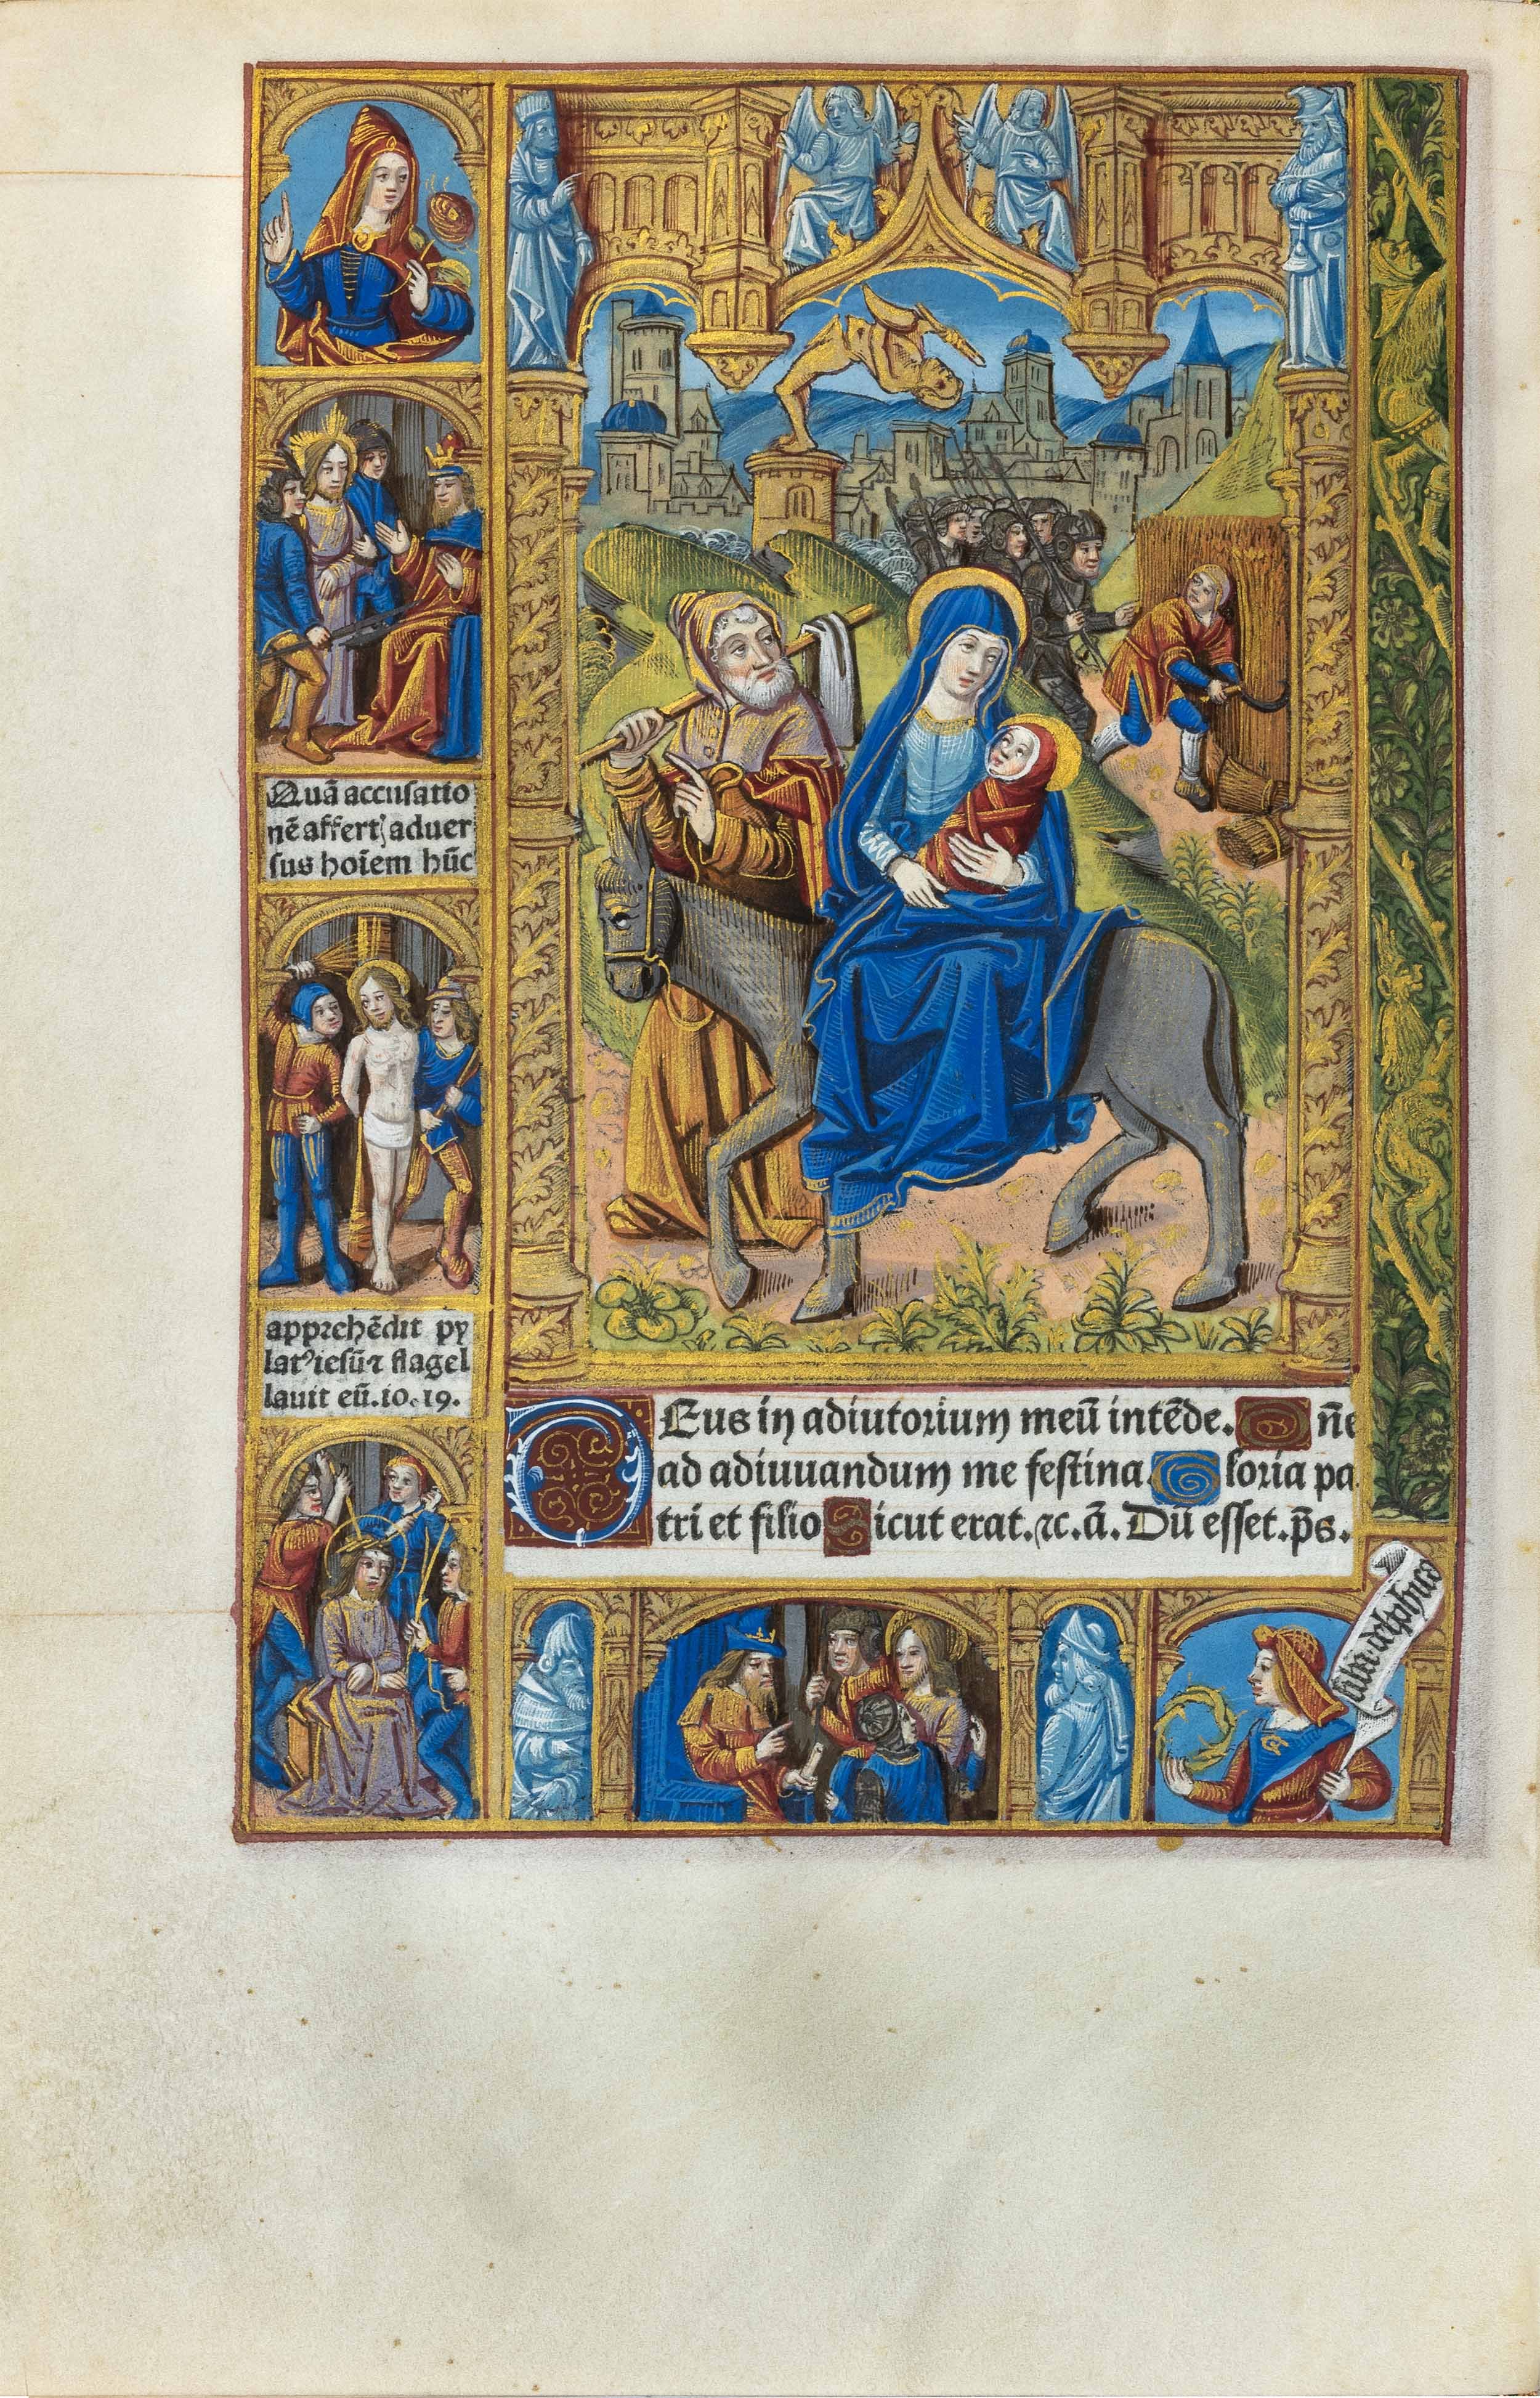 horae-bmv-16.9.1498-printed-book-of-hours-pigouchet-vostre-calixto crotus-illuminated-vellum-doheny-arcana-37.jpg